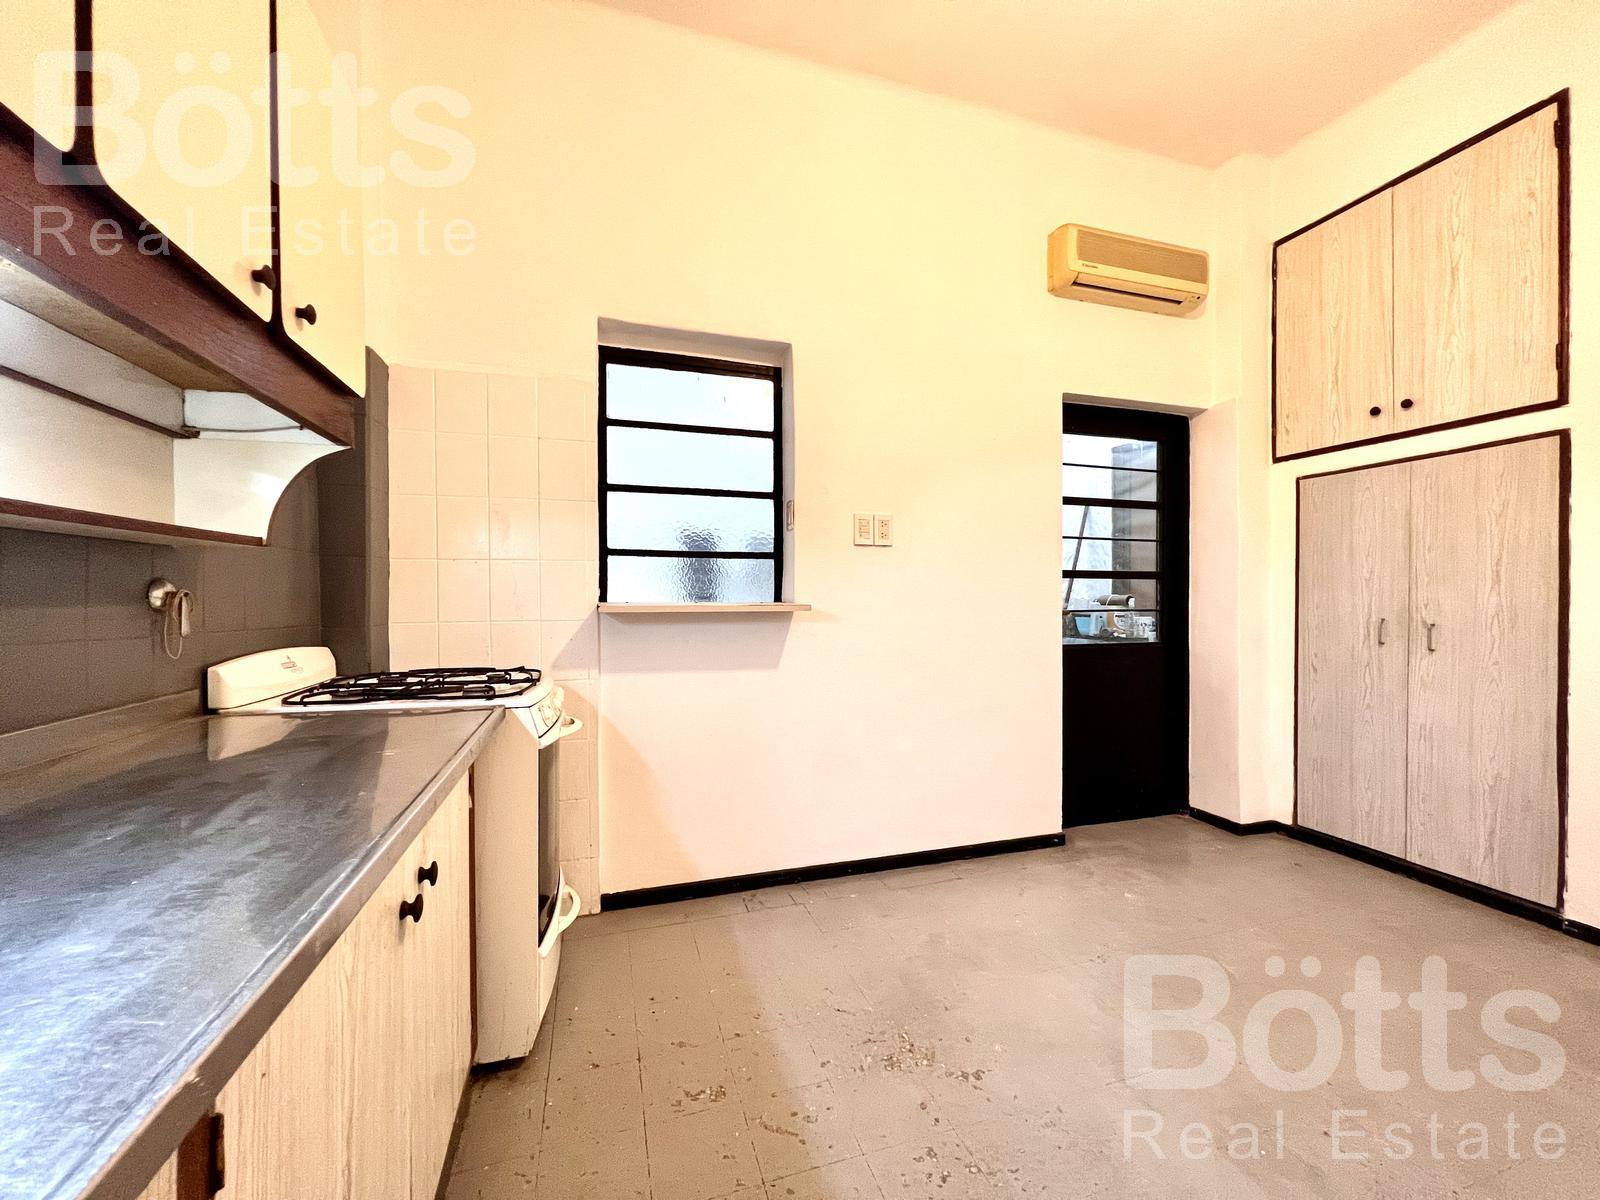 #5068516 | Rental | House | Belgrano (Bötts Real Estate)